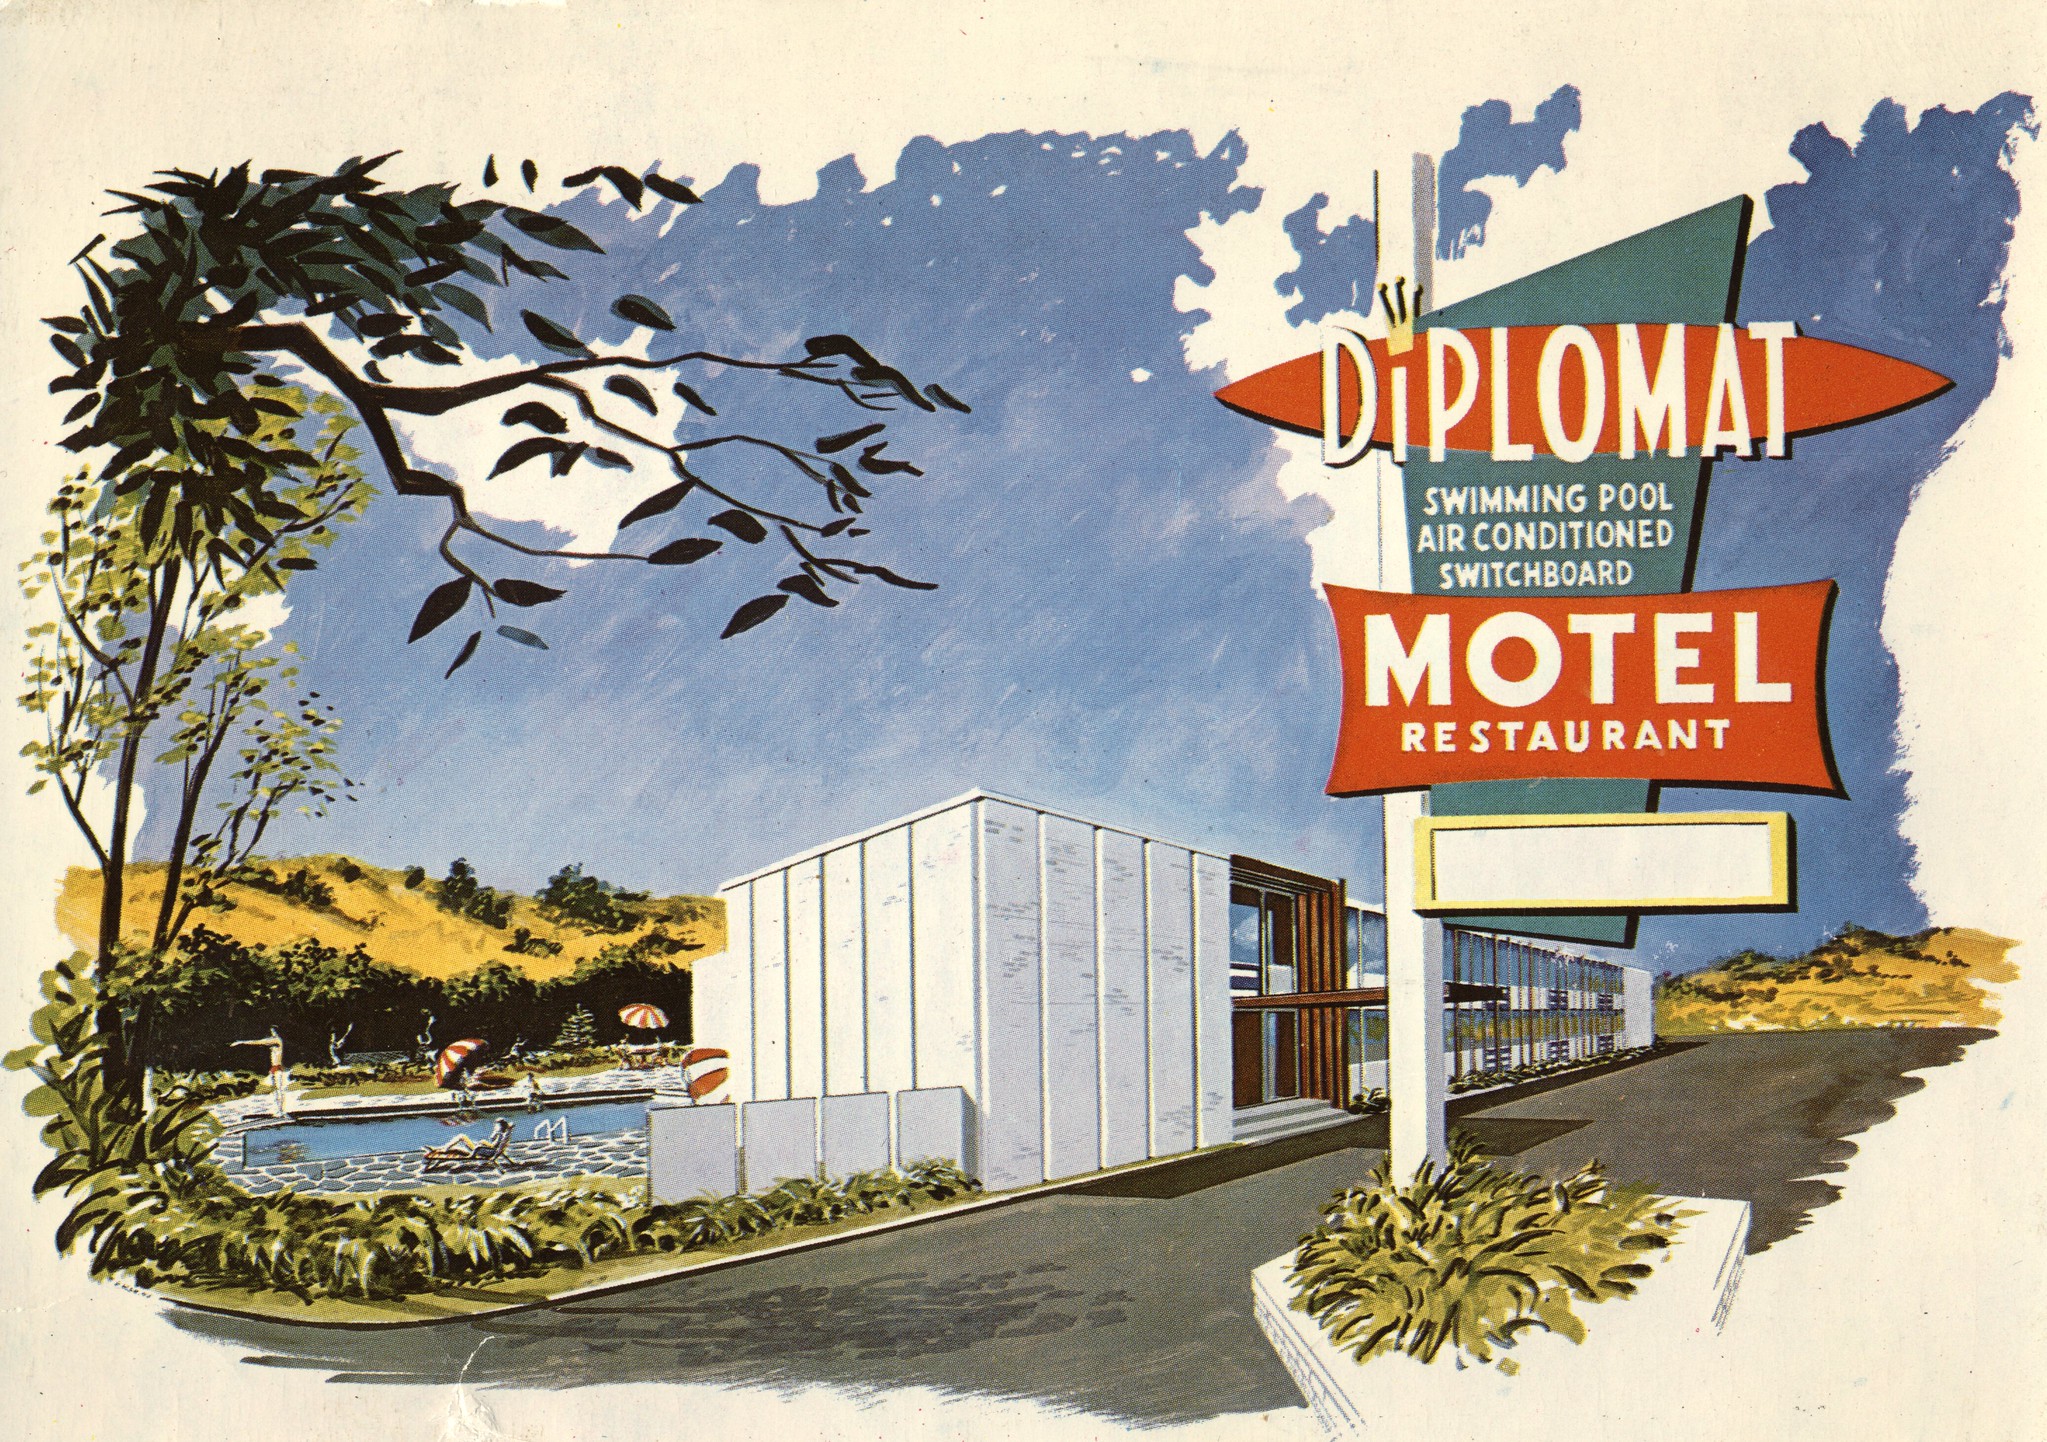 Diplomat Resort Motel - Gary, Indiana